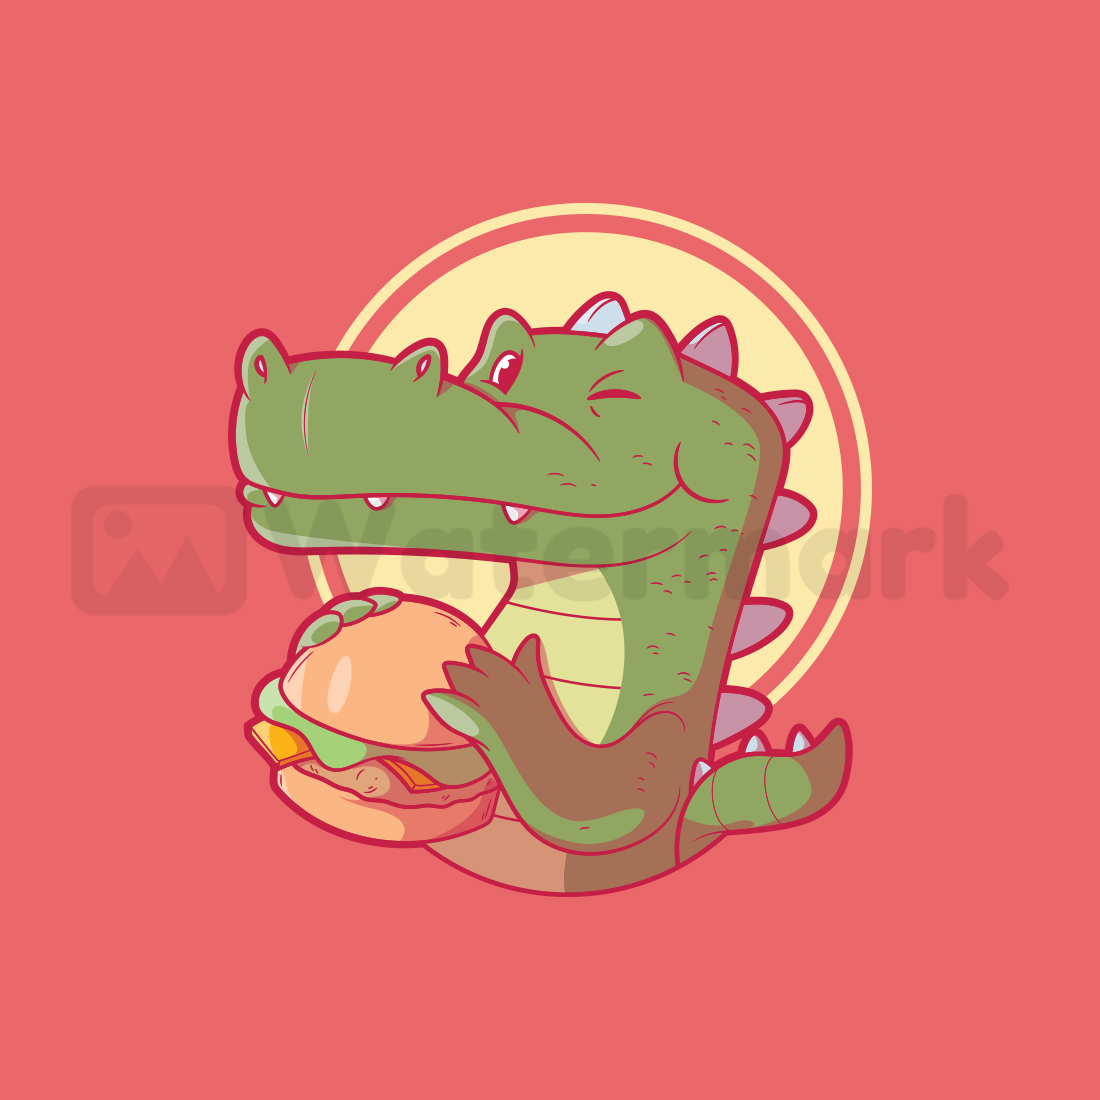 Crocodile eating a Burger! cover image.